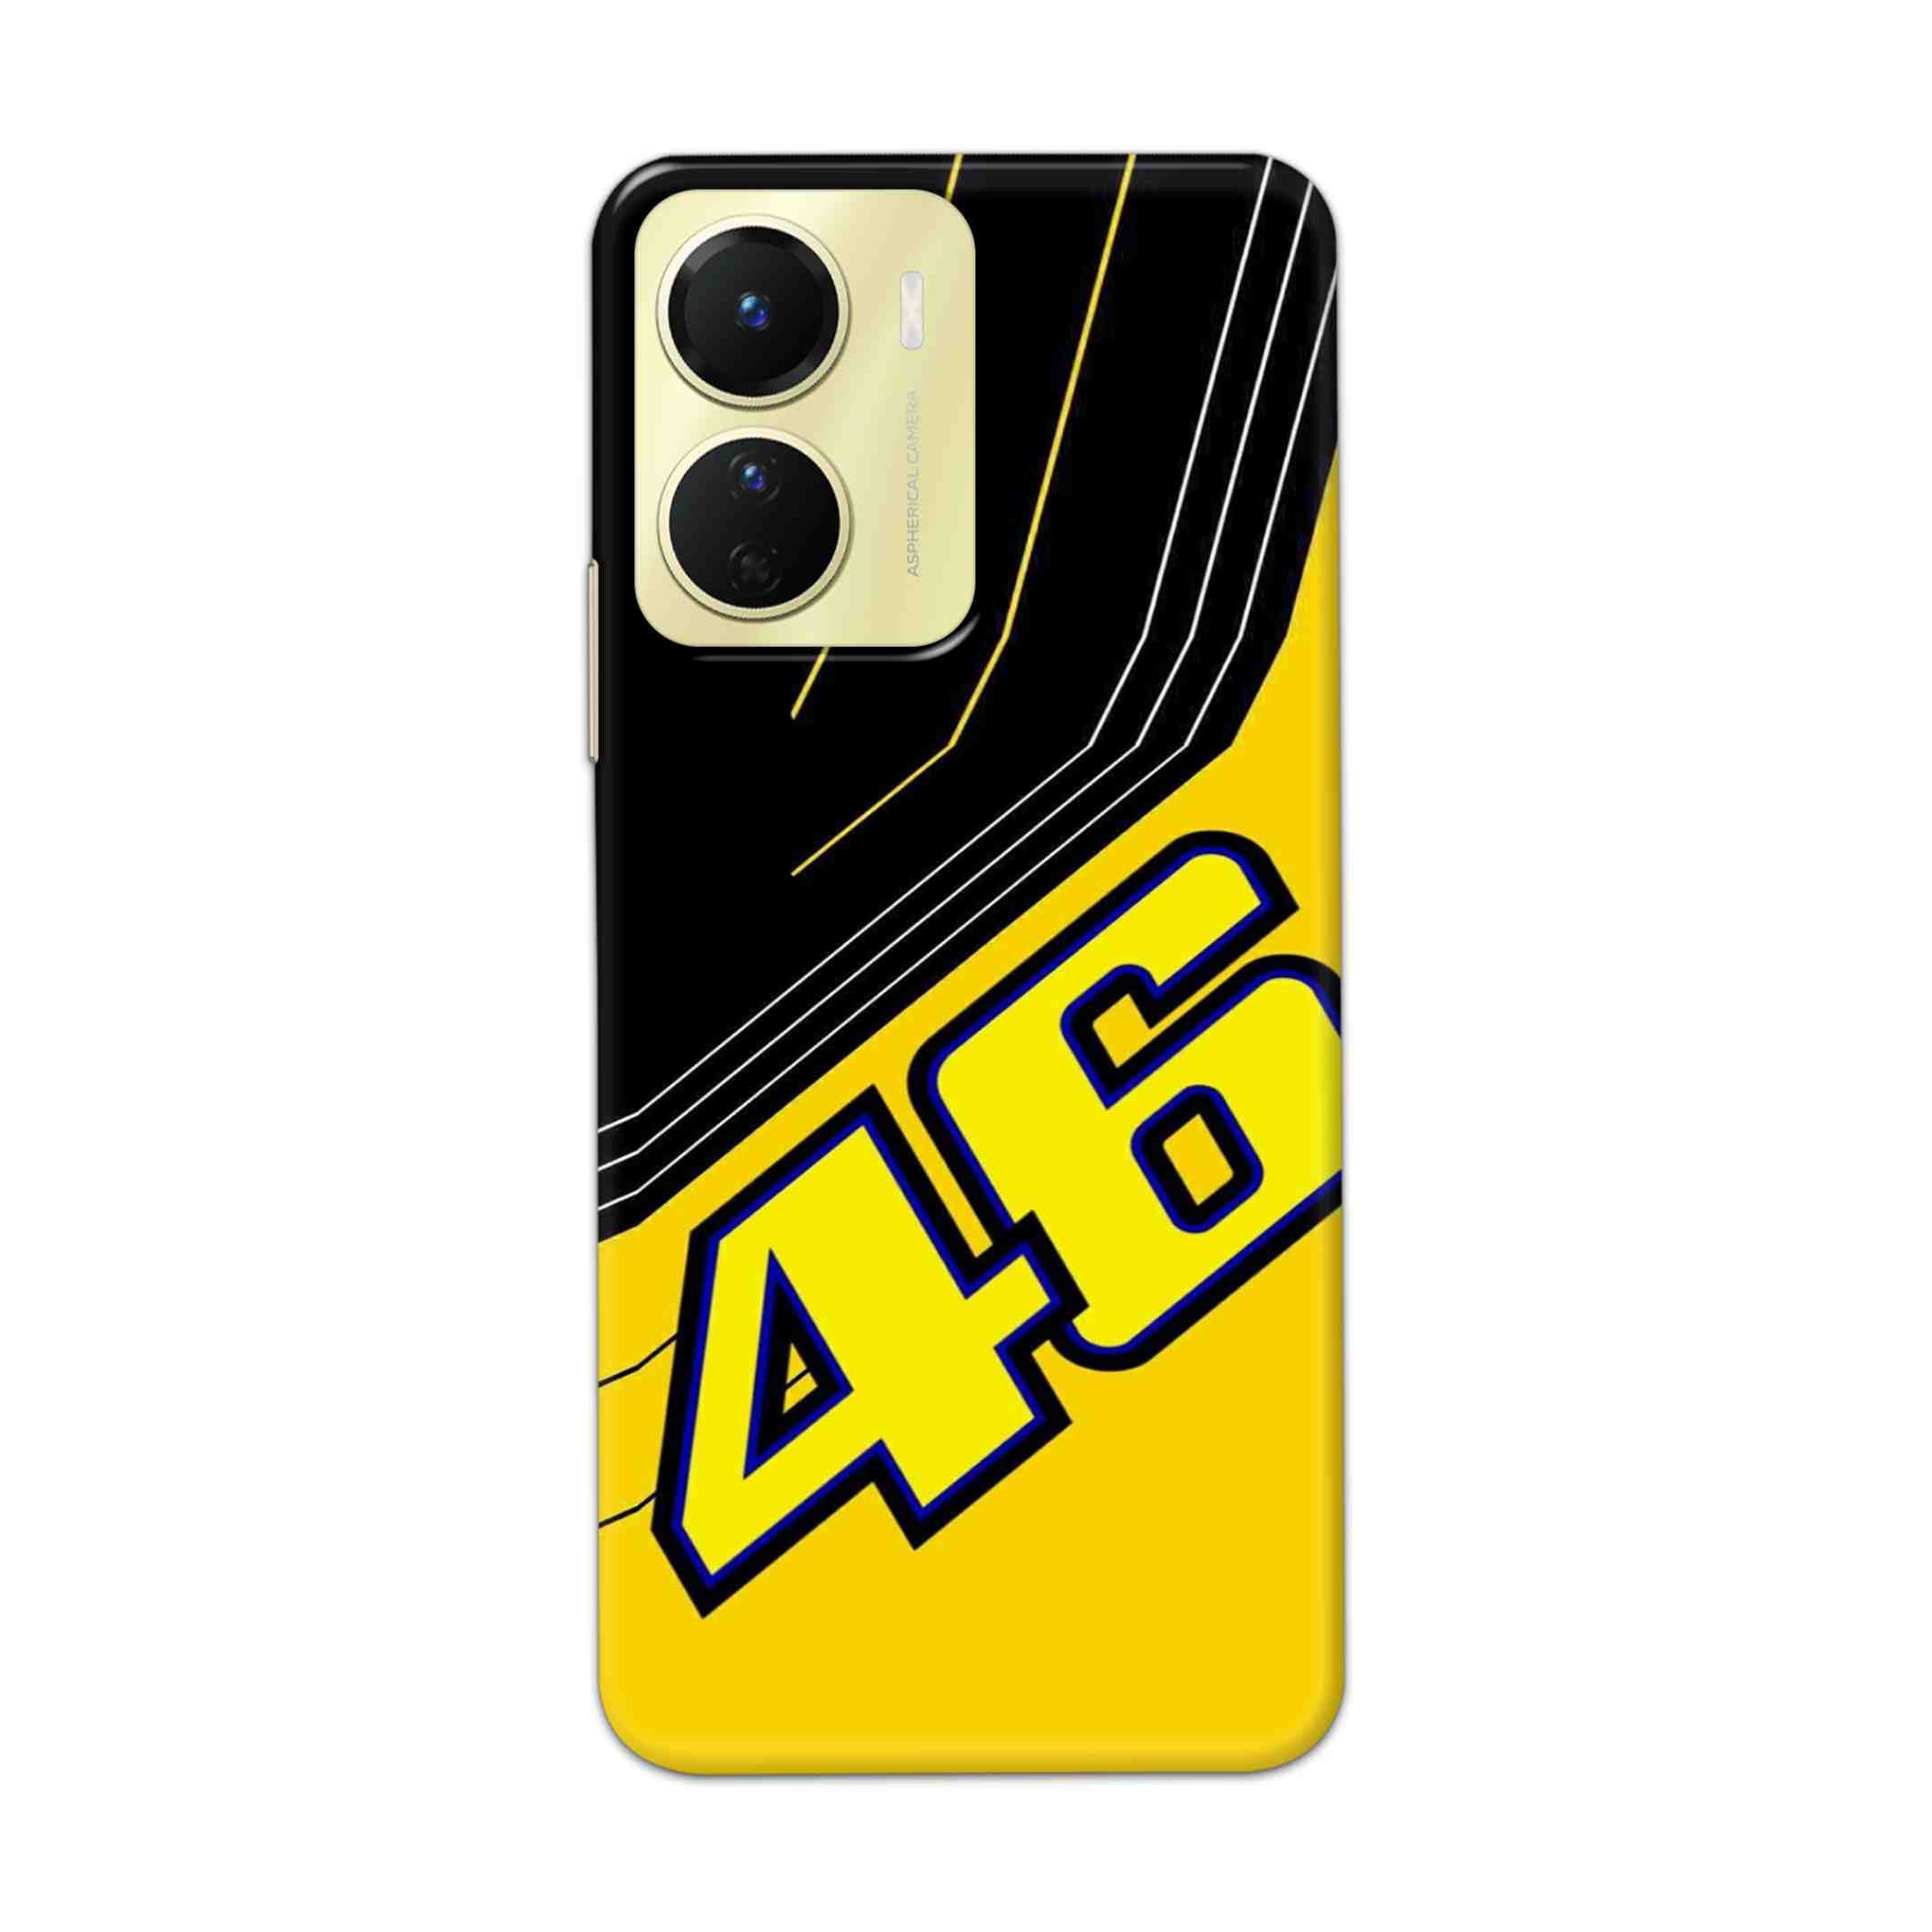 Buy 46 Hard Back Mobile Phone Case Cover For Vivo Y16 Online